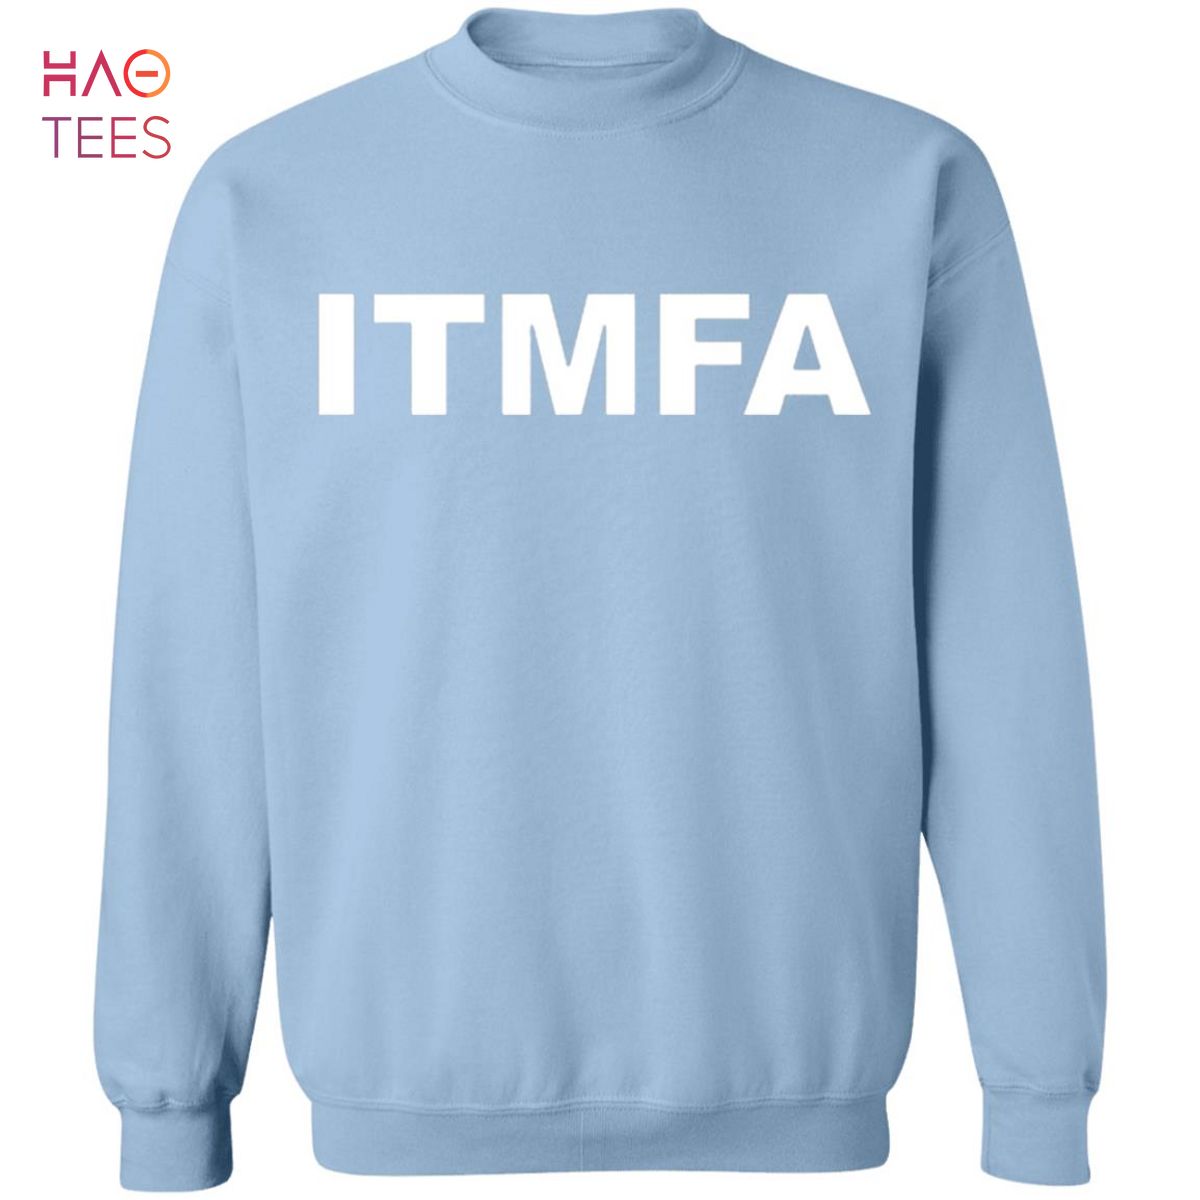 [NEW] Itmfa Sweater